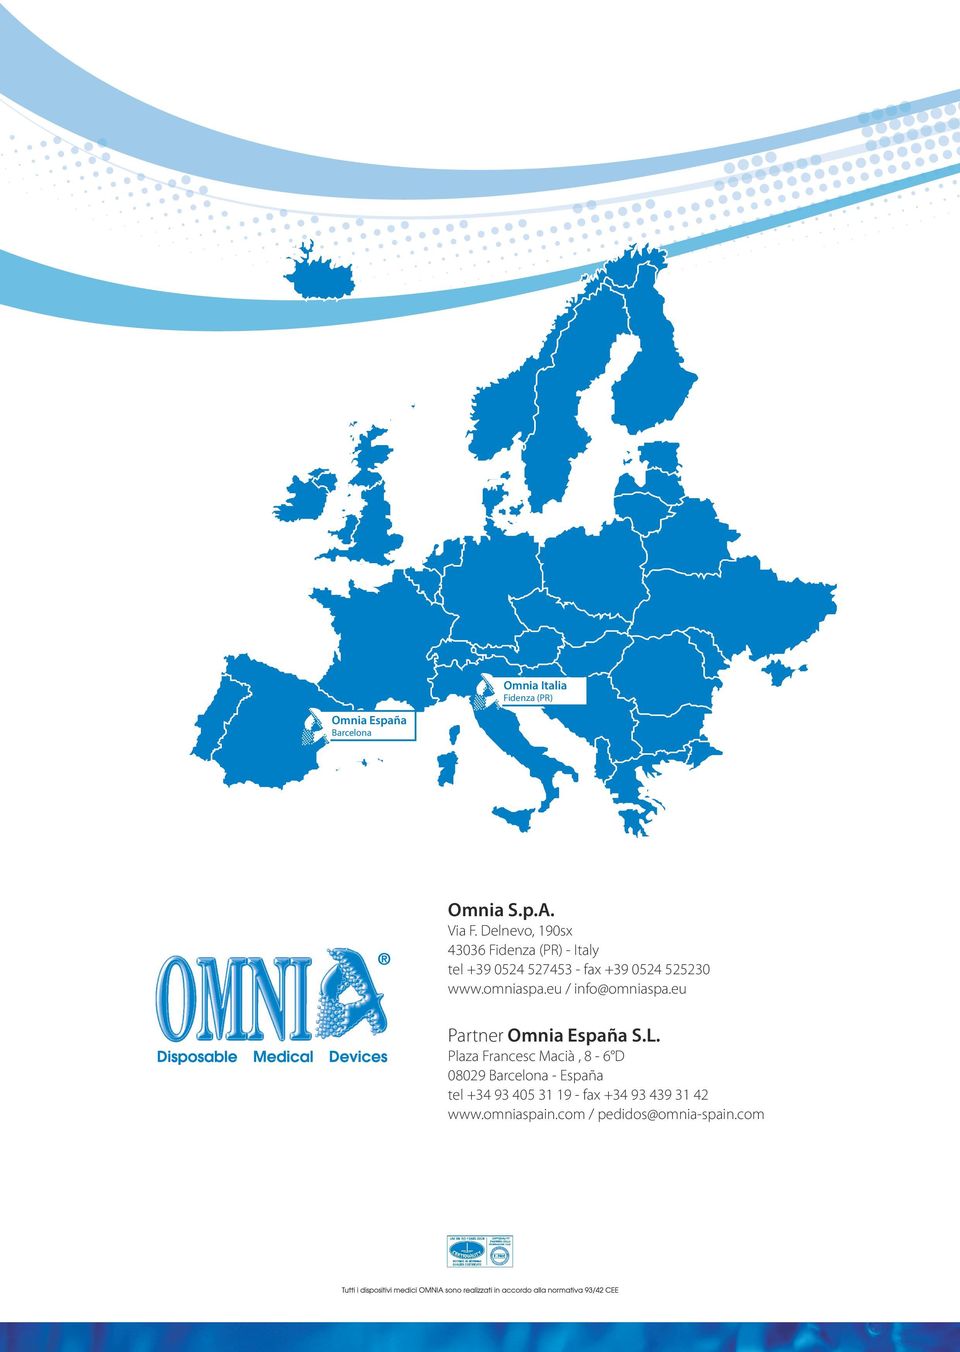 omniaspa.eu / info@omniaspa.eu Partner Omnia España S.L.